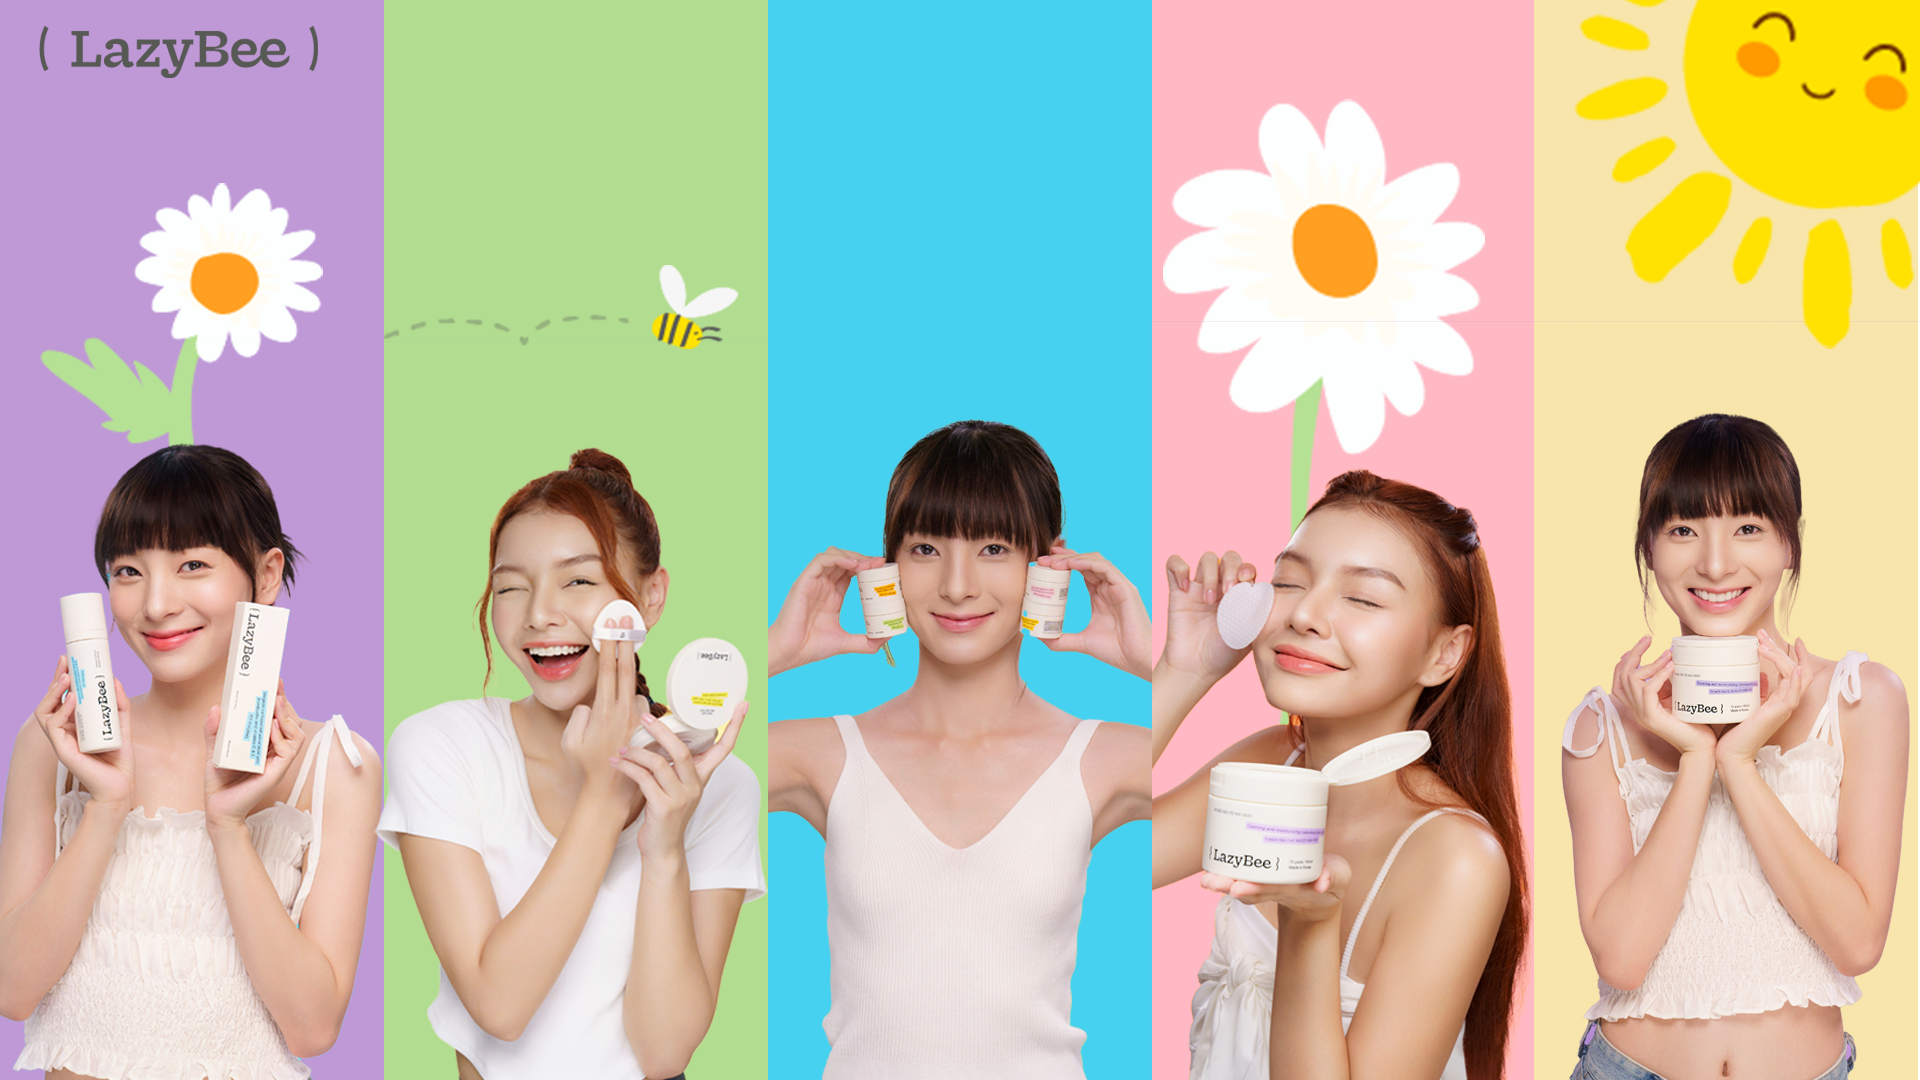 BAEMIN launches Lazy Bee beauty brand